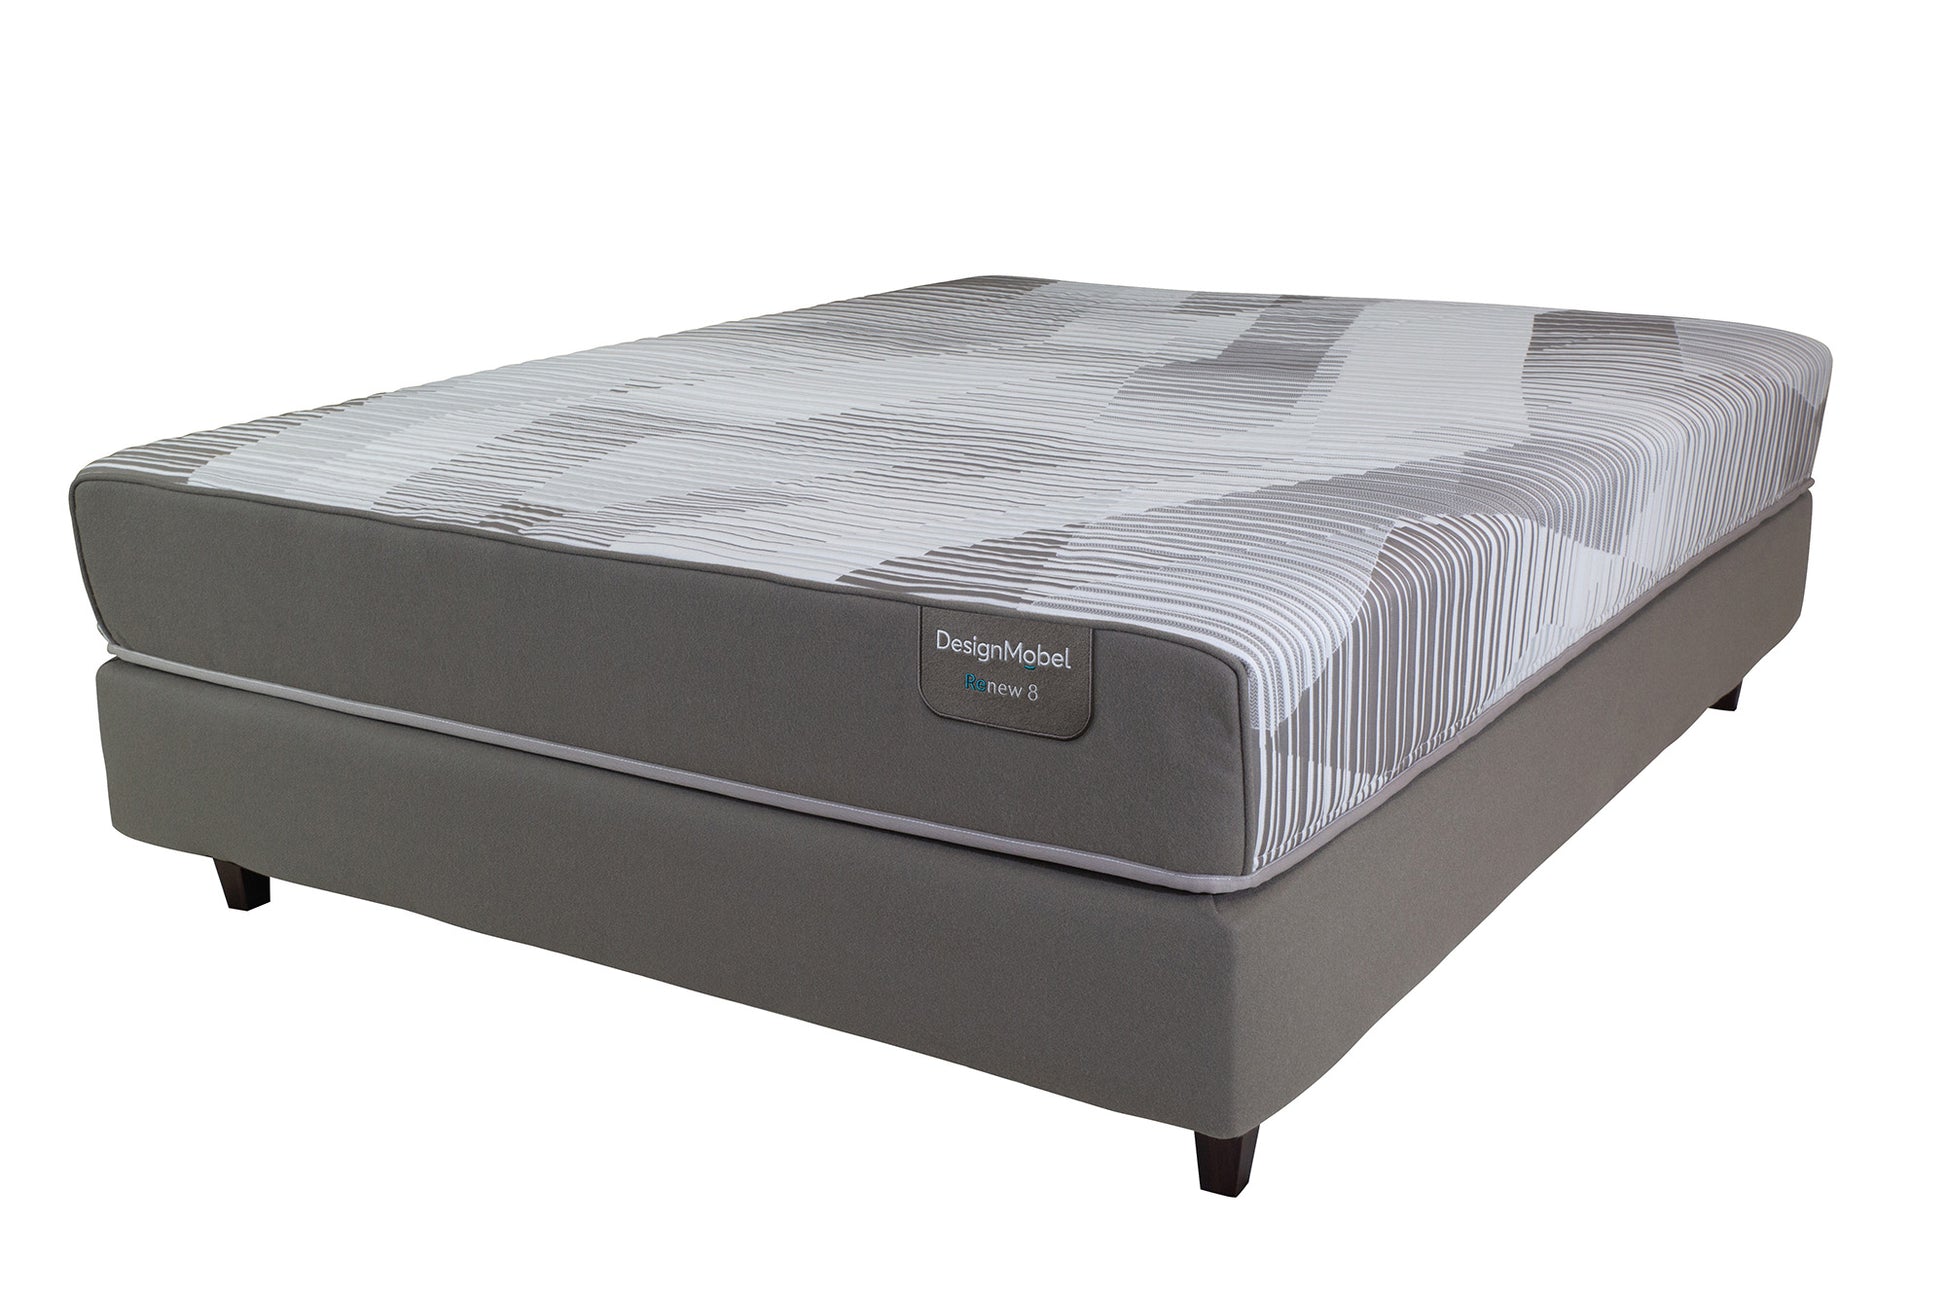 renew8-king-single-mattress-2